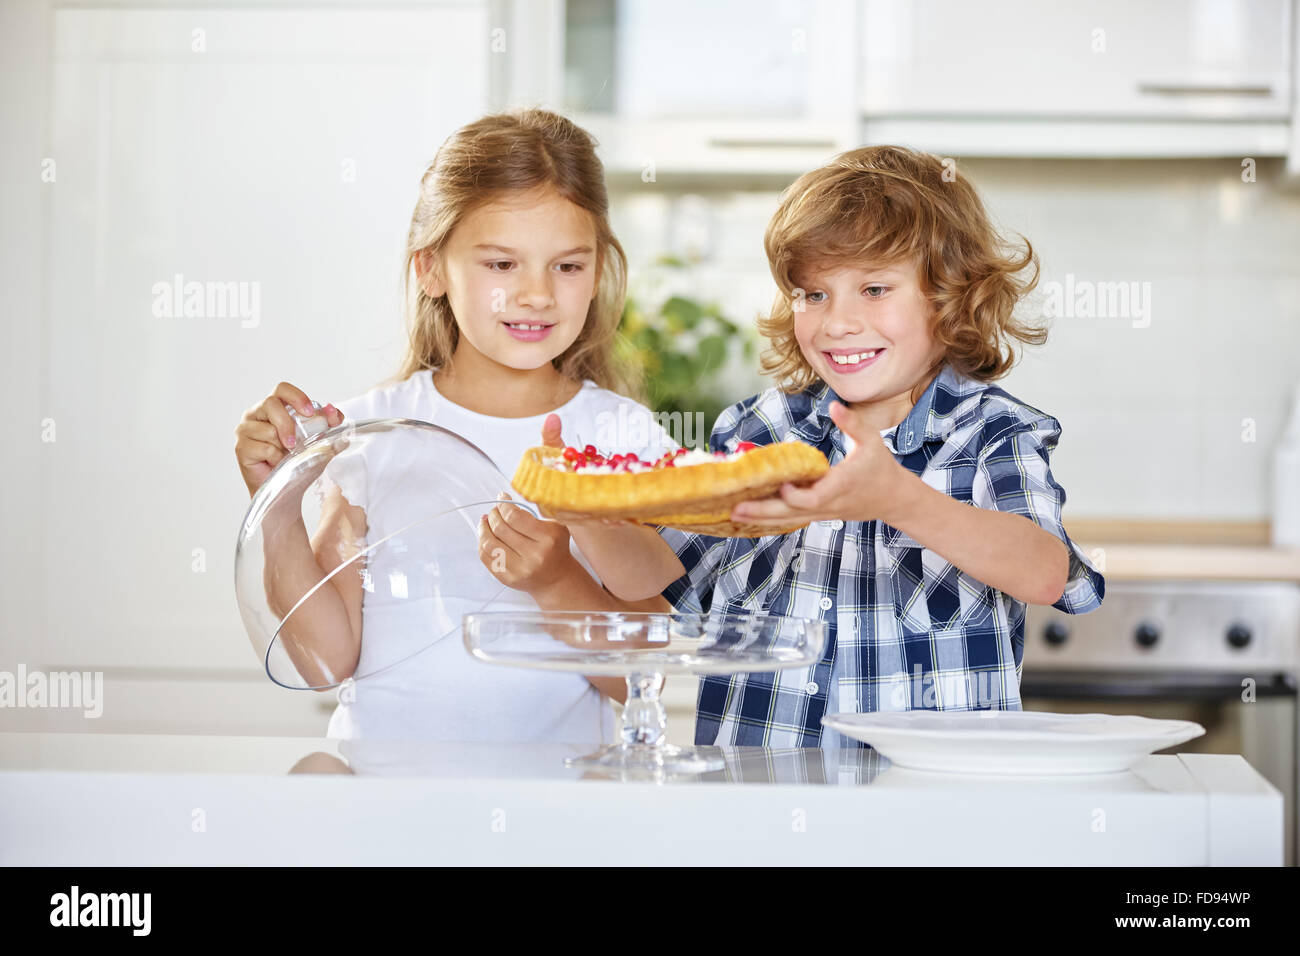 Children presenting their homemade fruitcake in the kitchen Stock Photo